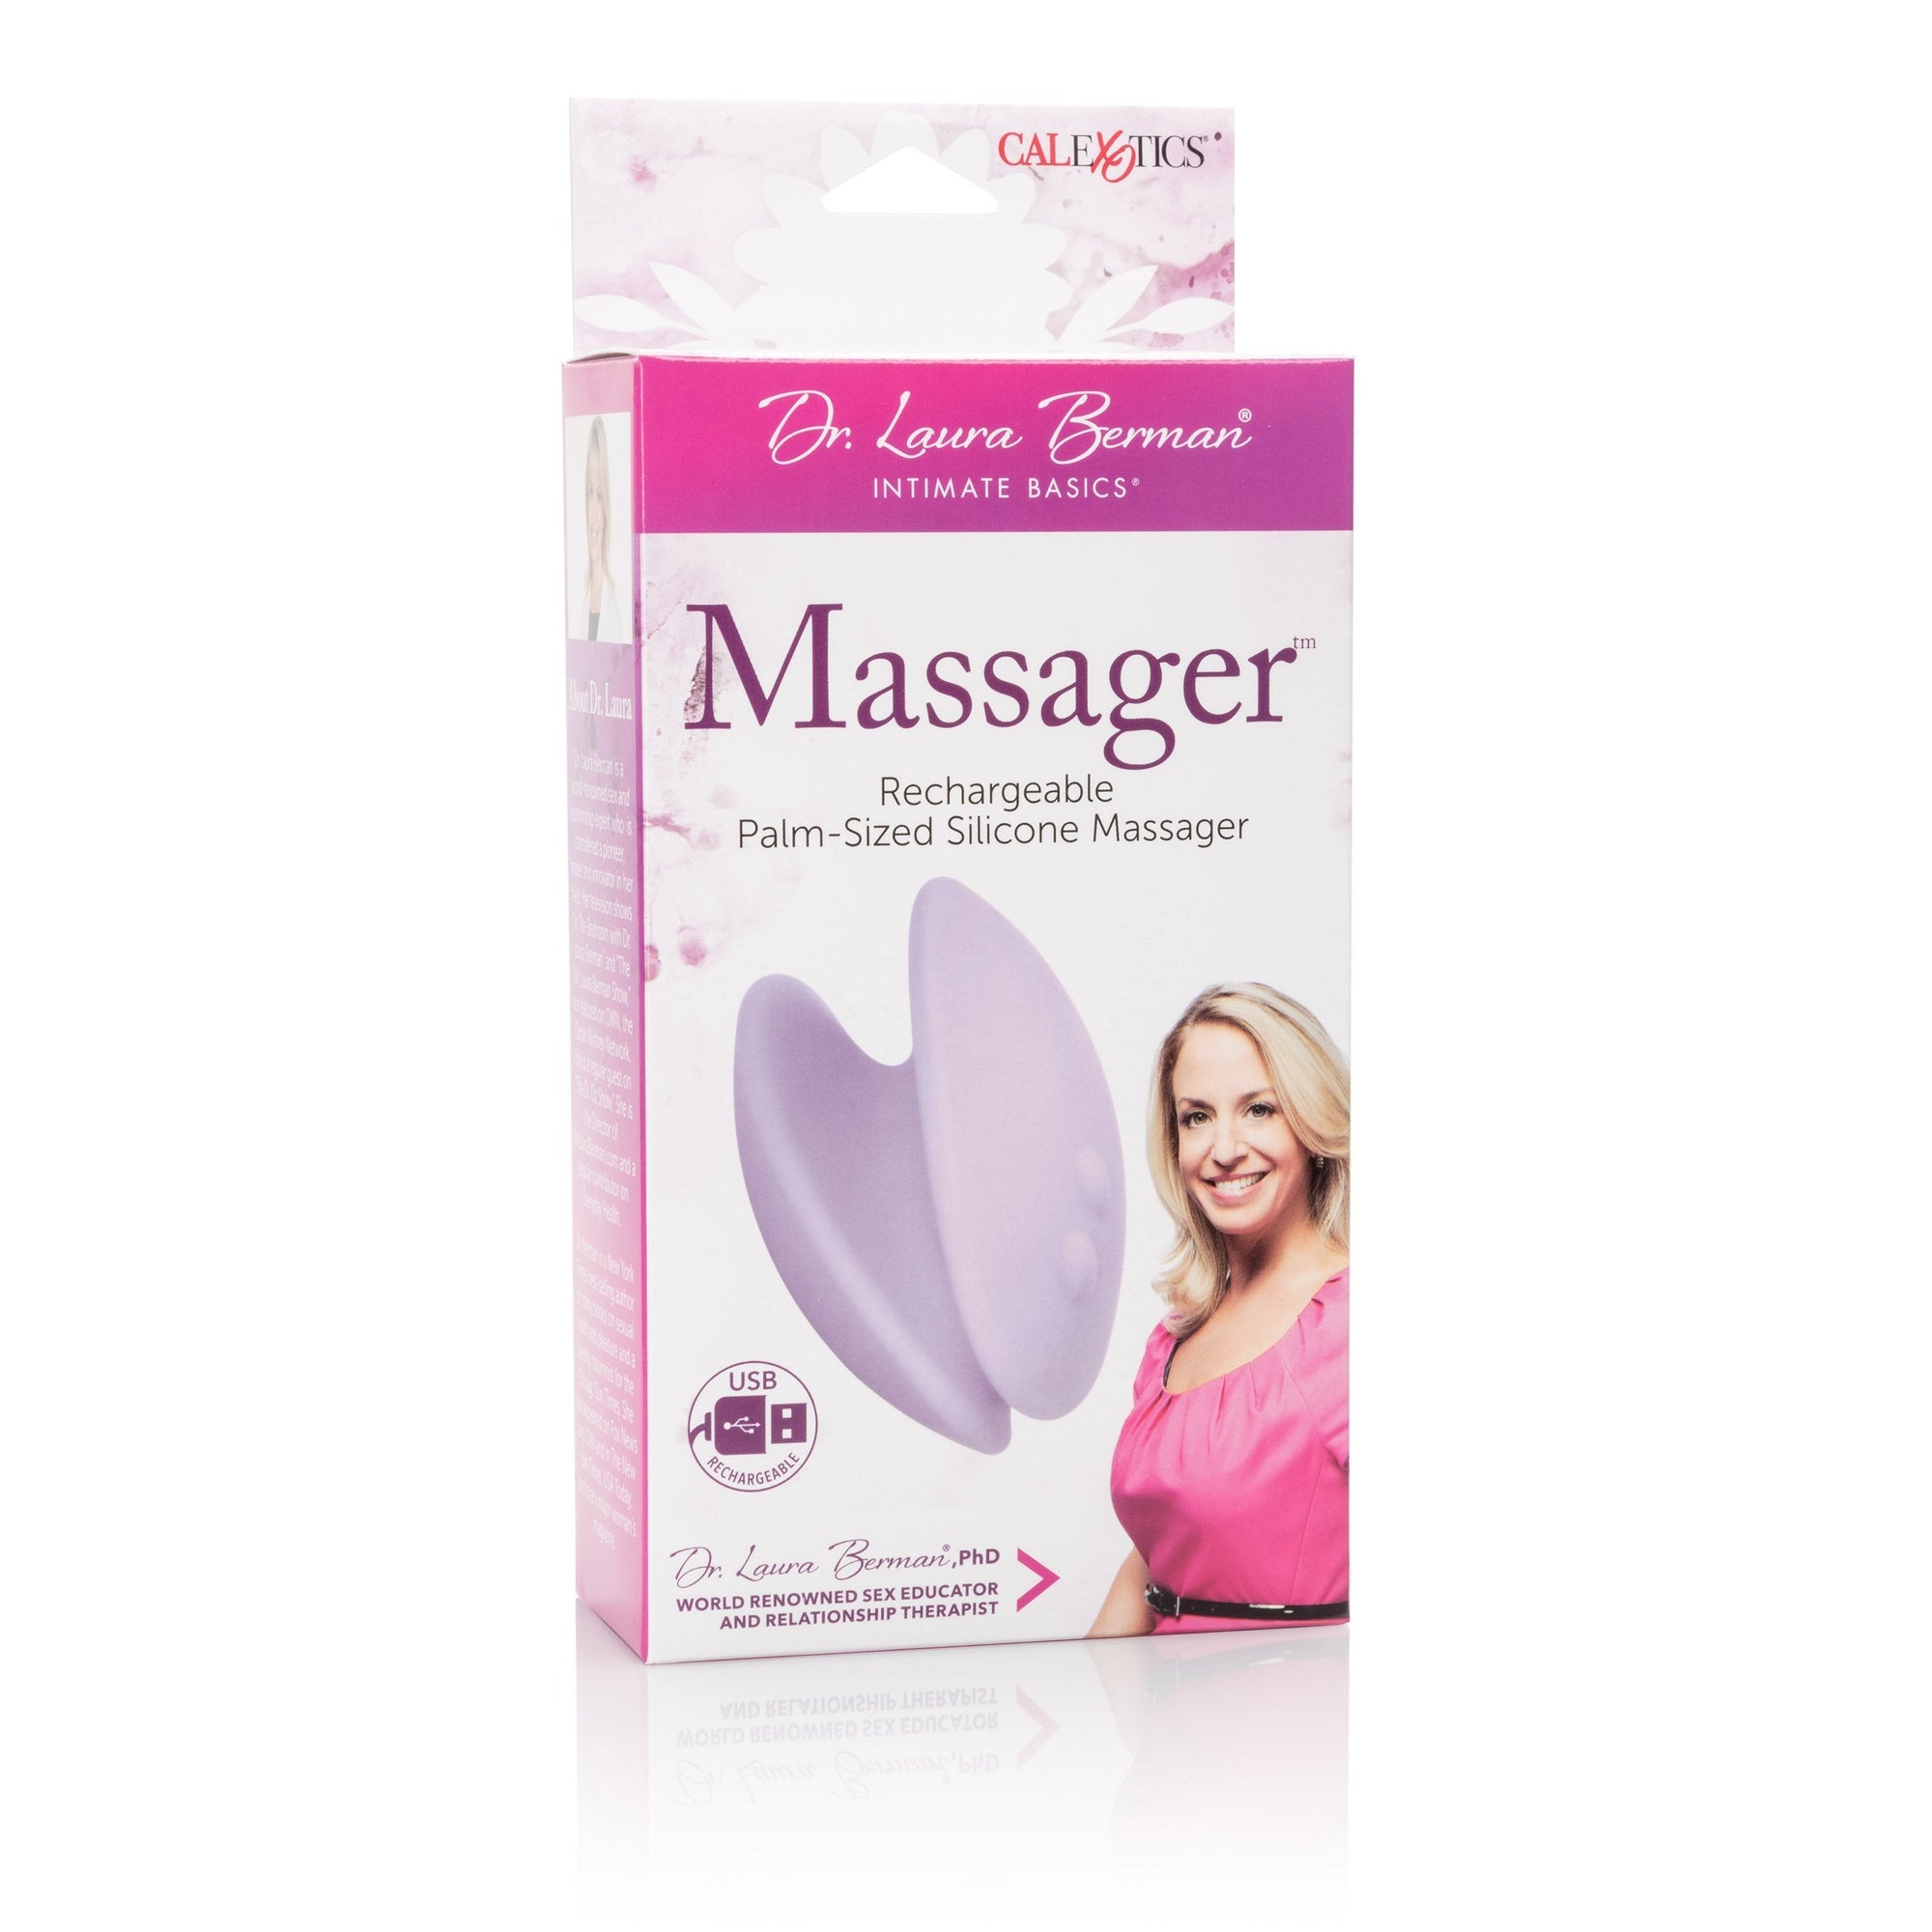 California Exotics - Dr Laura Berman Massager Palm-Sized Silicone Clit Massager (Purple) -  Clit Massager (Vibration) Rechargeable  Durio.sg